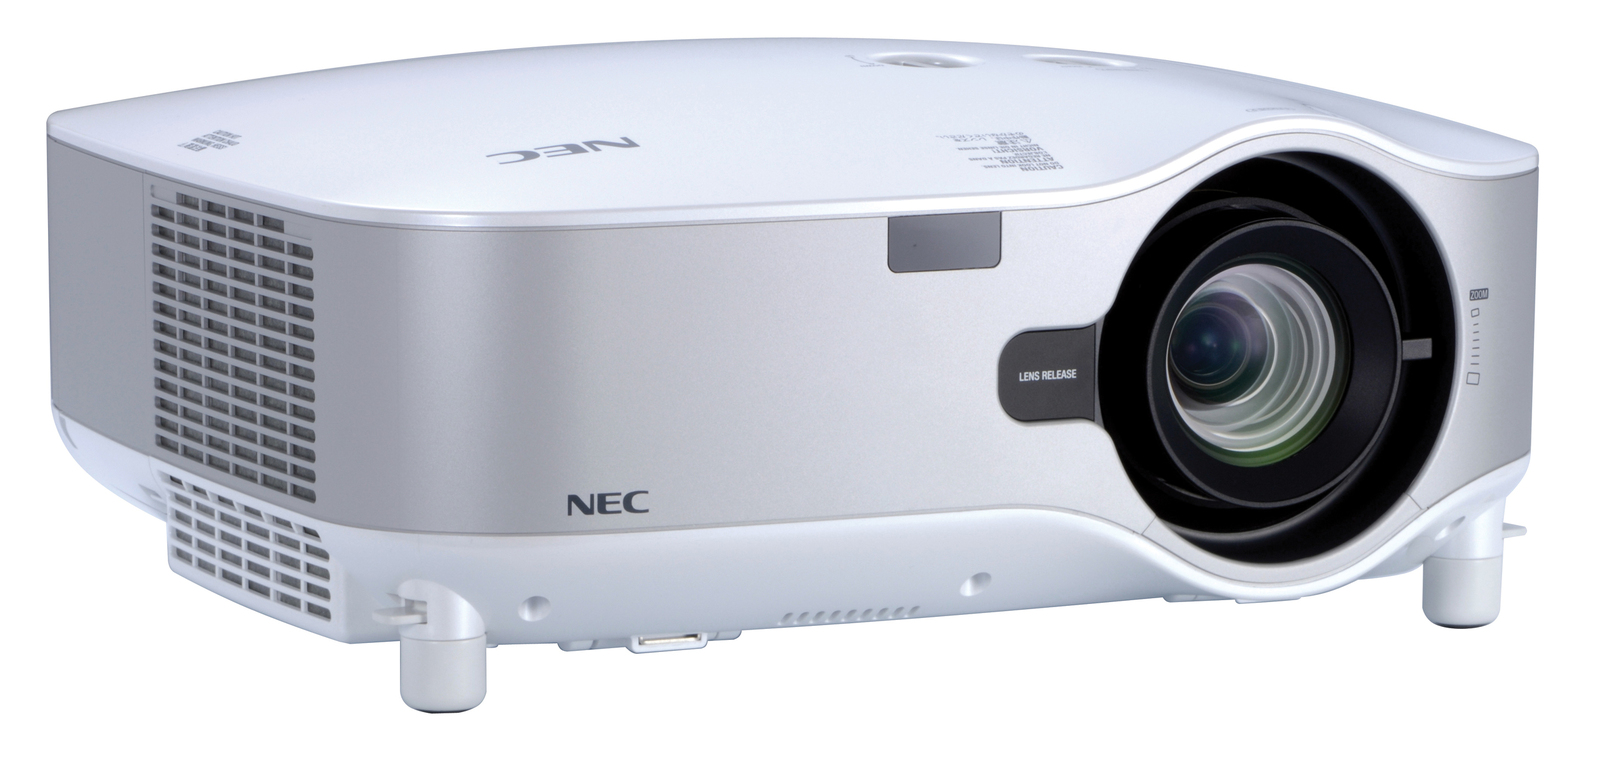 NEC NP2150 1024x768 Projector DVI VGA Composite S-Video Component 4200 Lumens Full Size Image